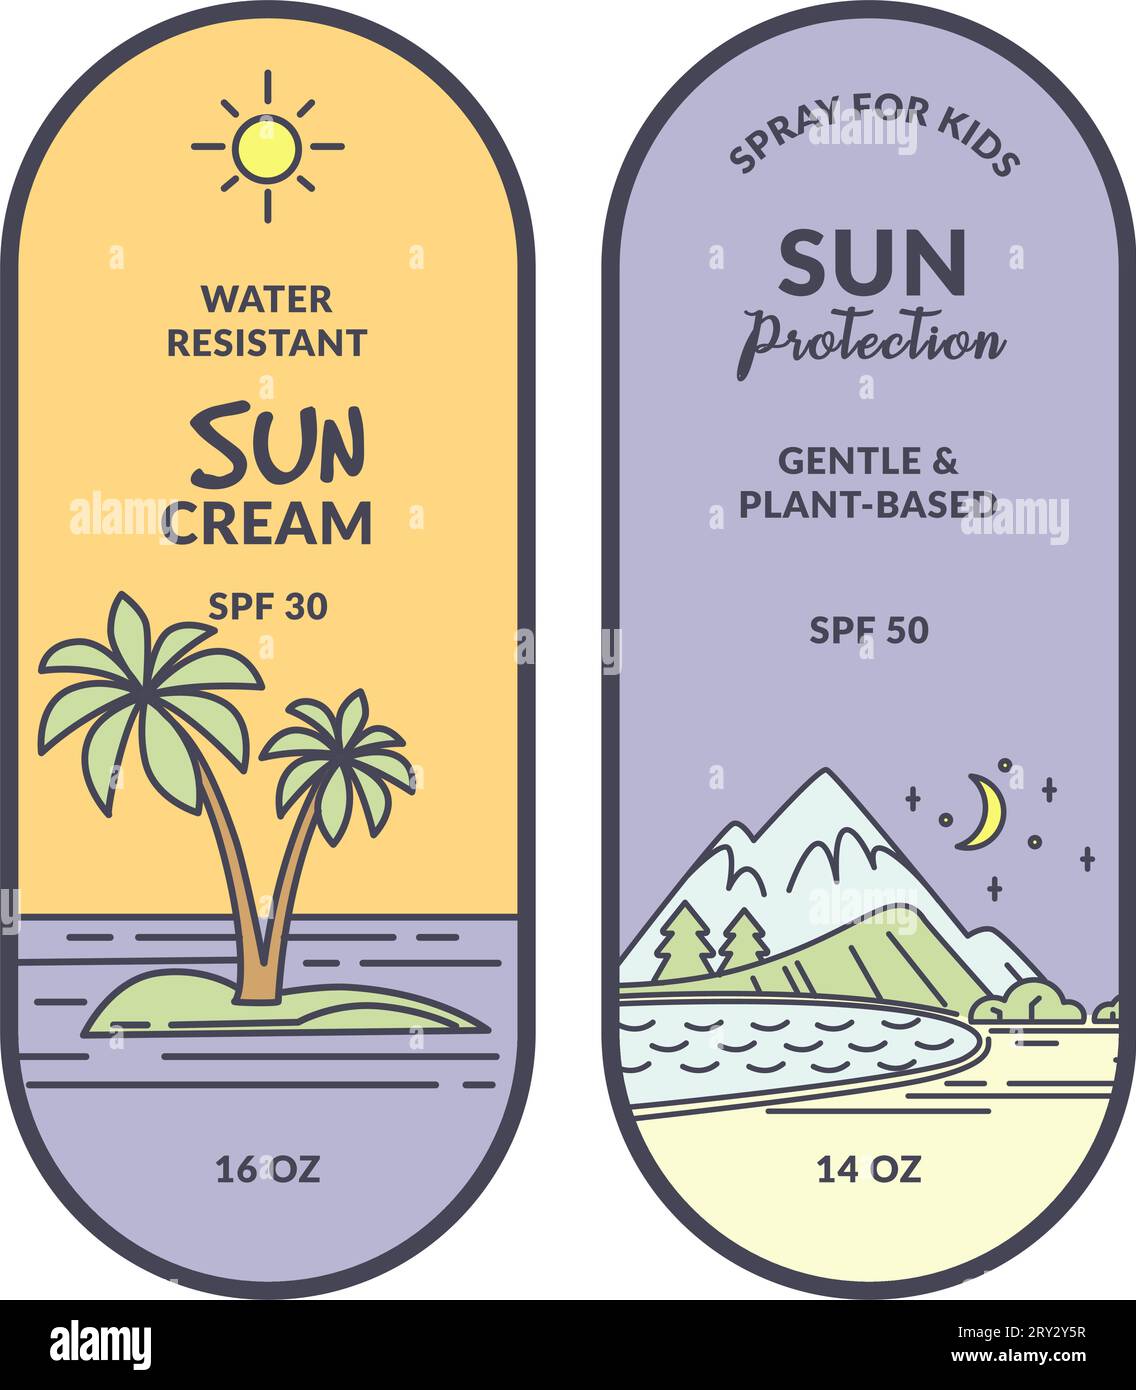 Water resistant sun cream, sunscreen labels vector Stock Vector